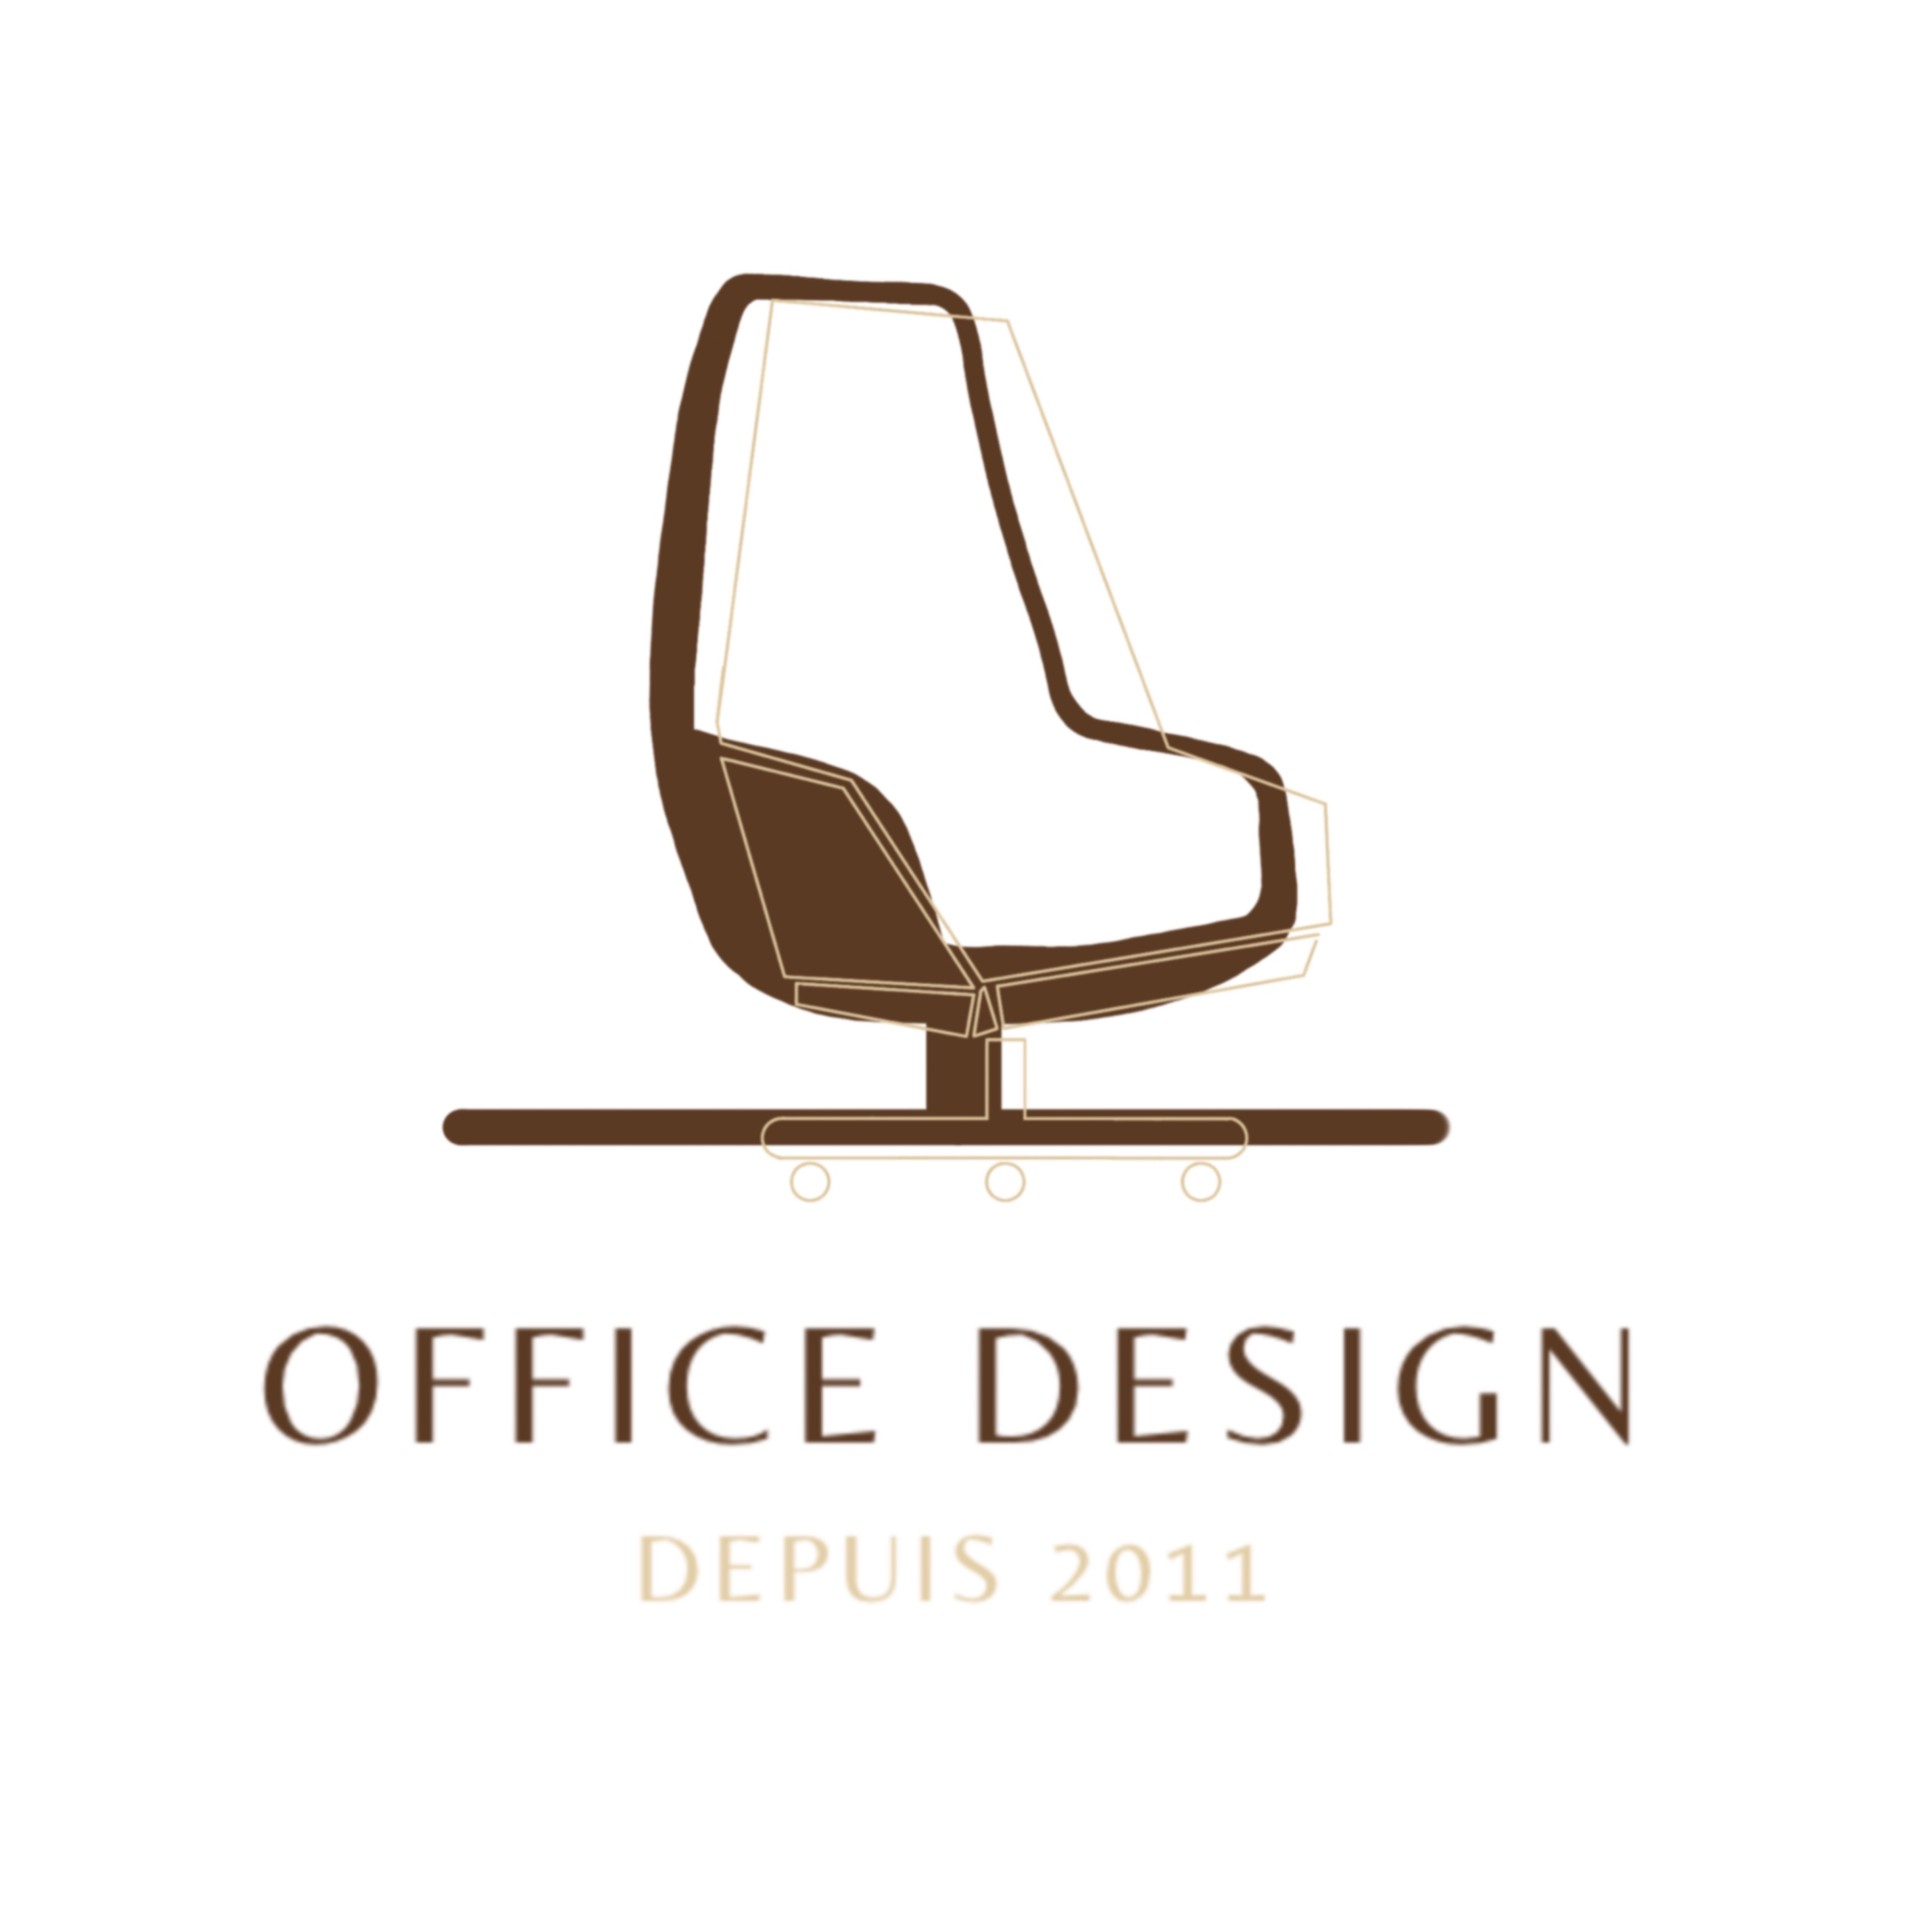 Office Design - Vente de Mobilier de Bureau Design Professionnel